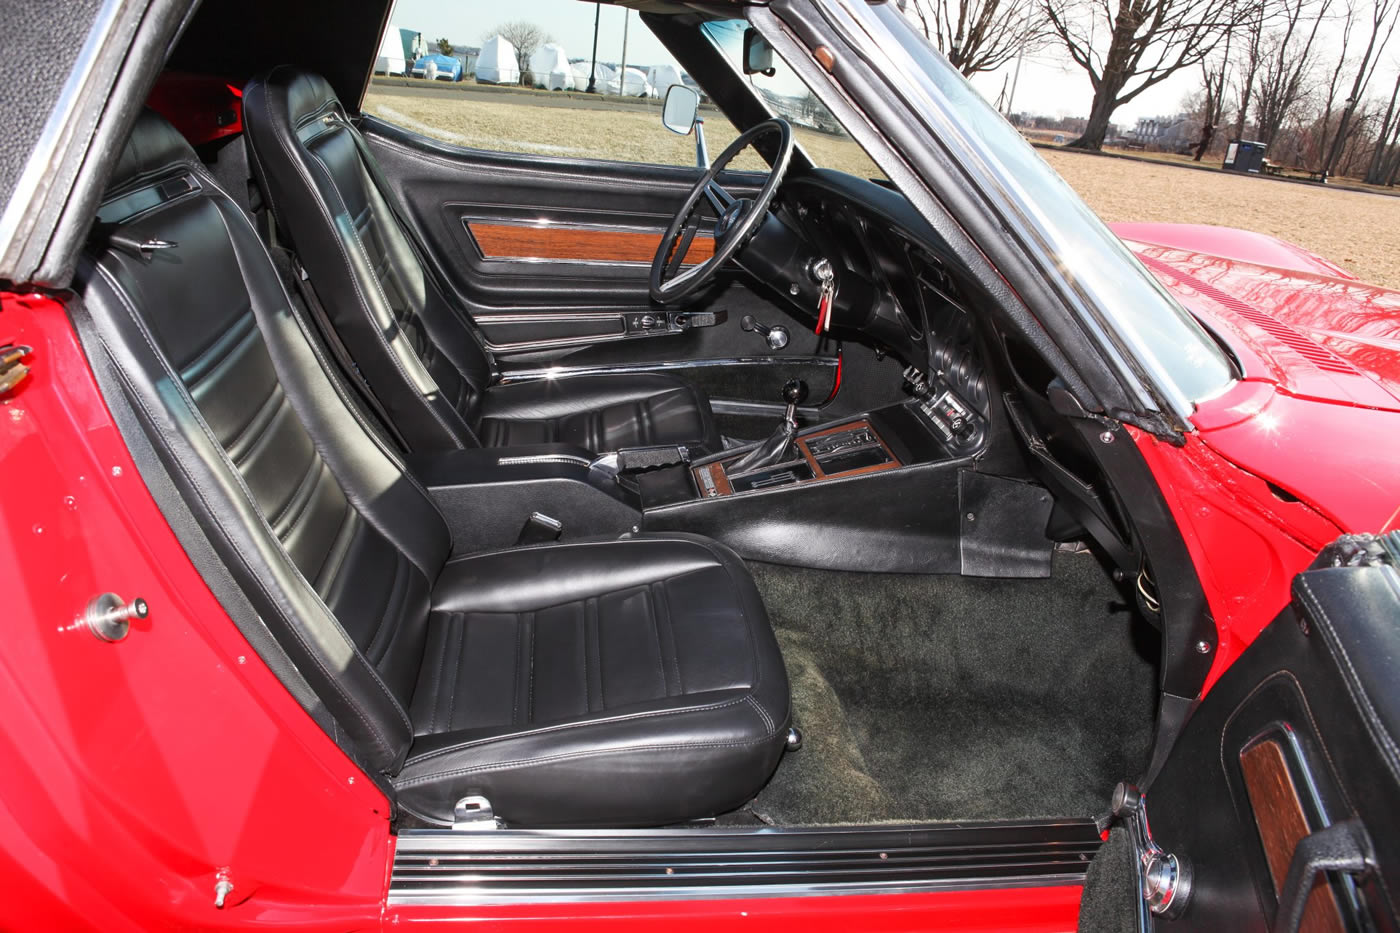 1972 Corvette Convertible LT-1 4-Speed in Mille Miglia Red